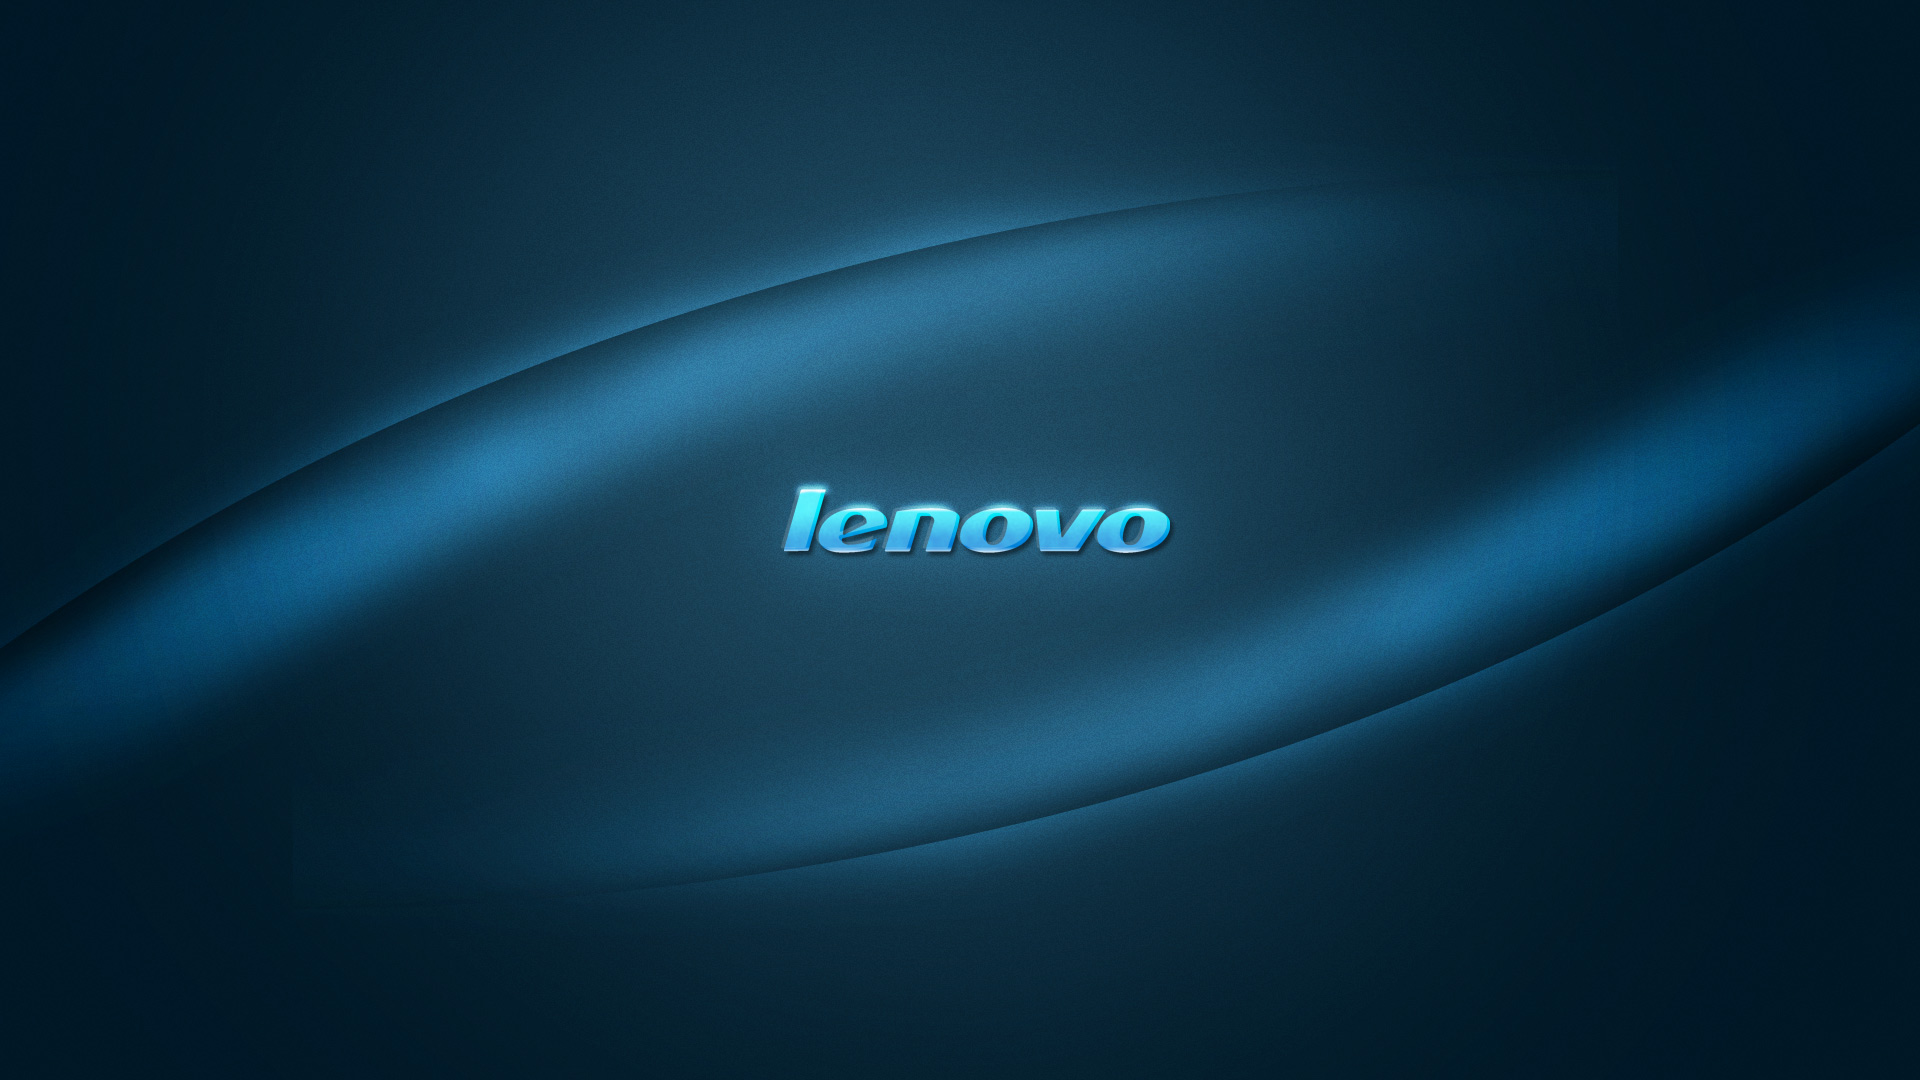 LenovowallpapersthatcomewithWindows81  English Community  LENOVO  COMMUNITY